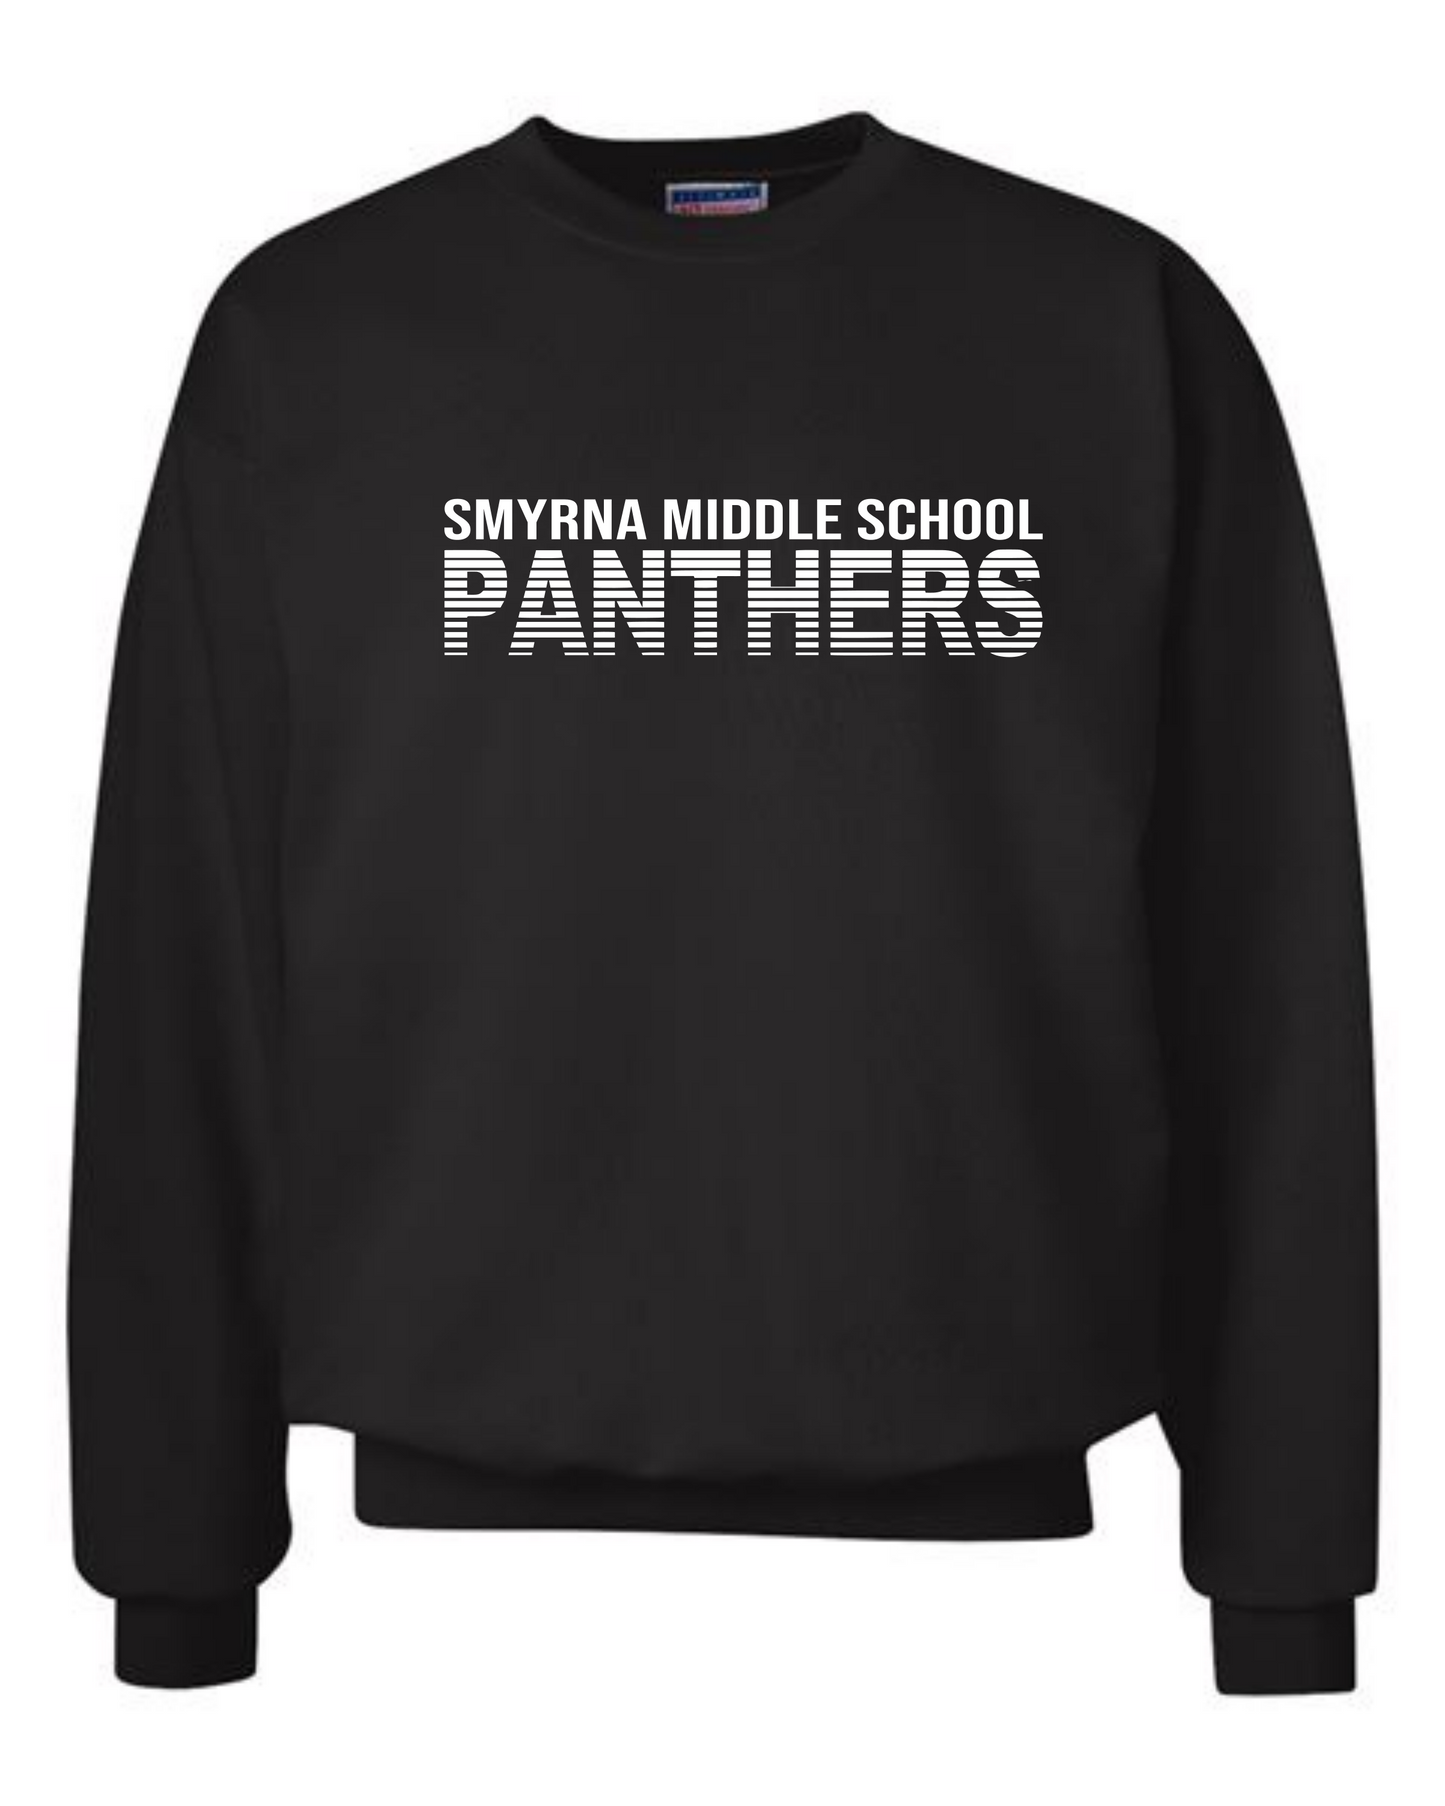 Smyrna Middle School Panthers Sweatshirt